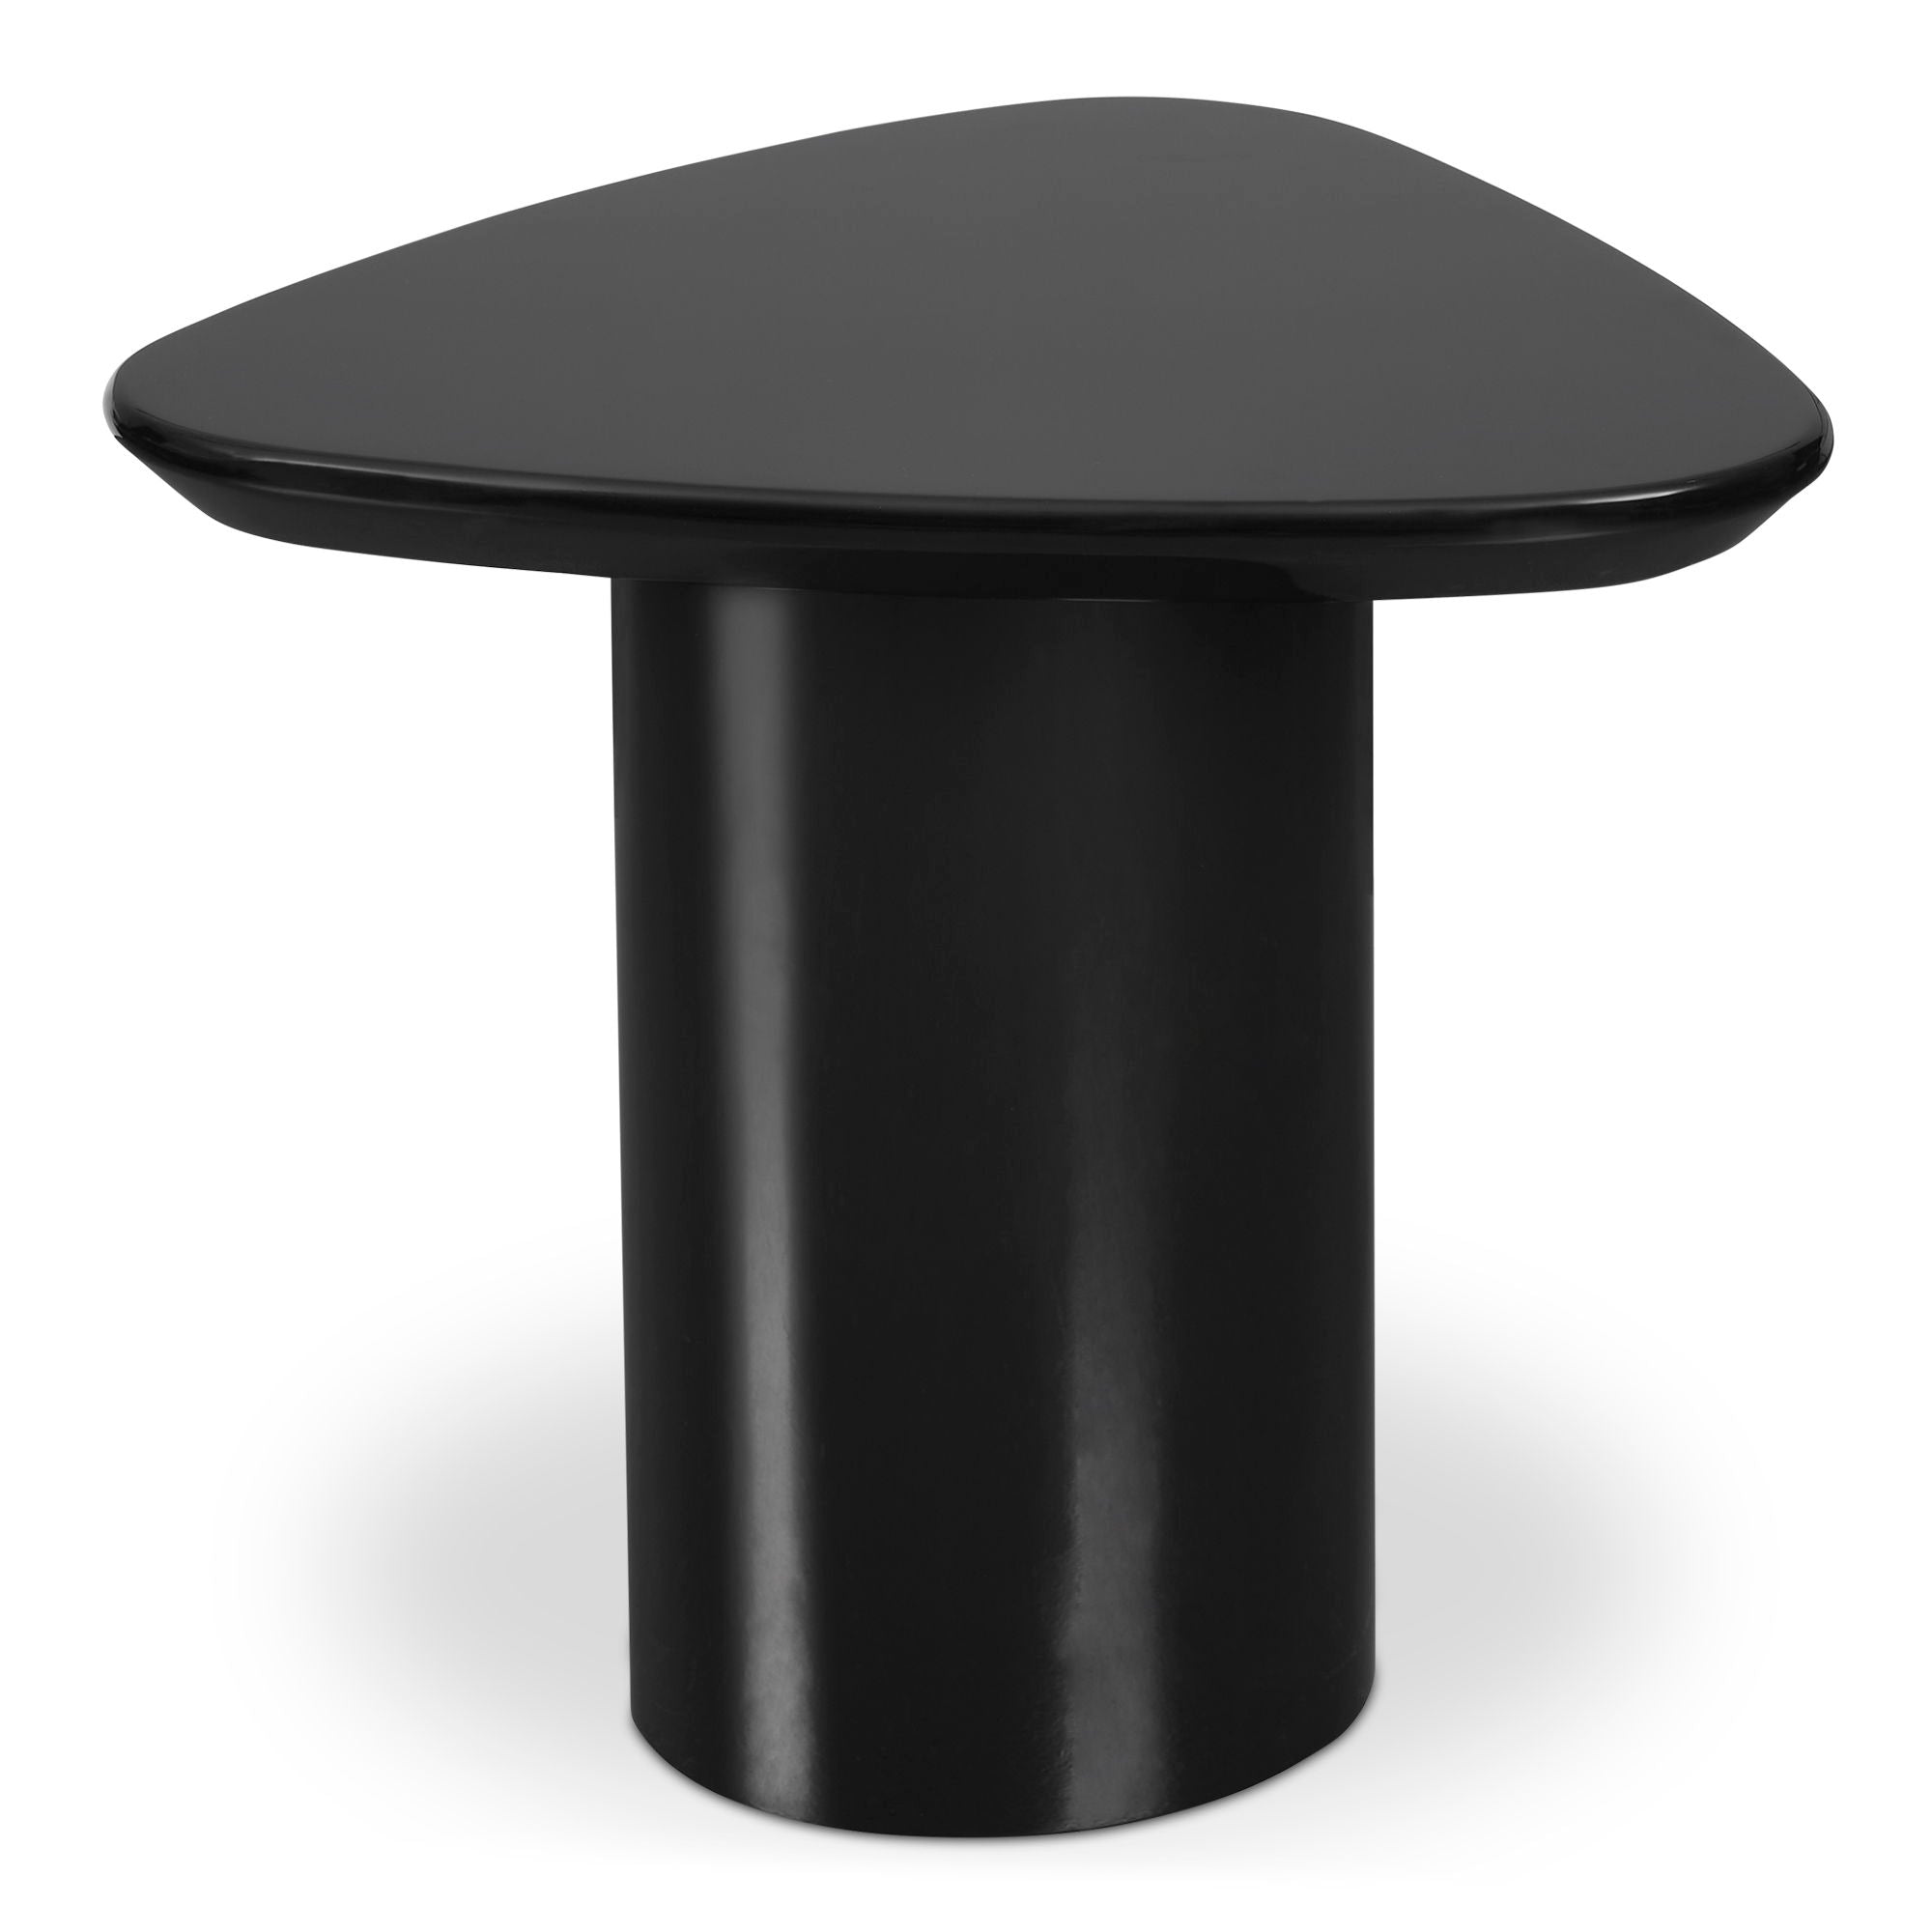 Edem - Accentt Table - Black